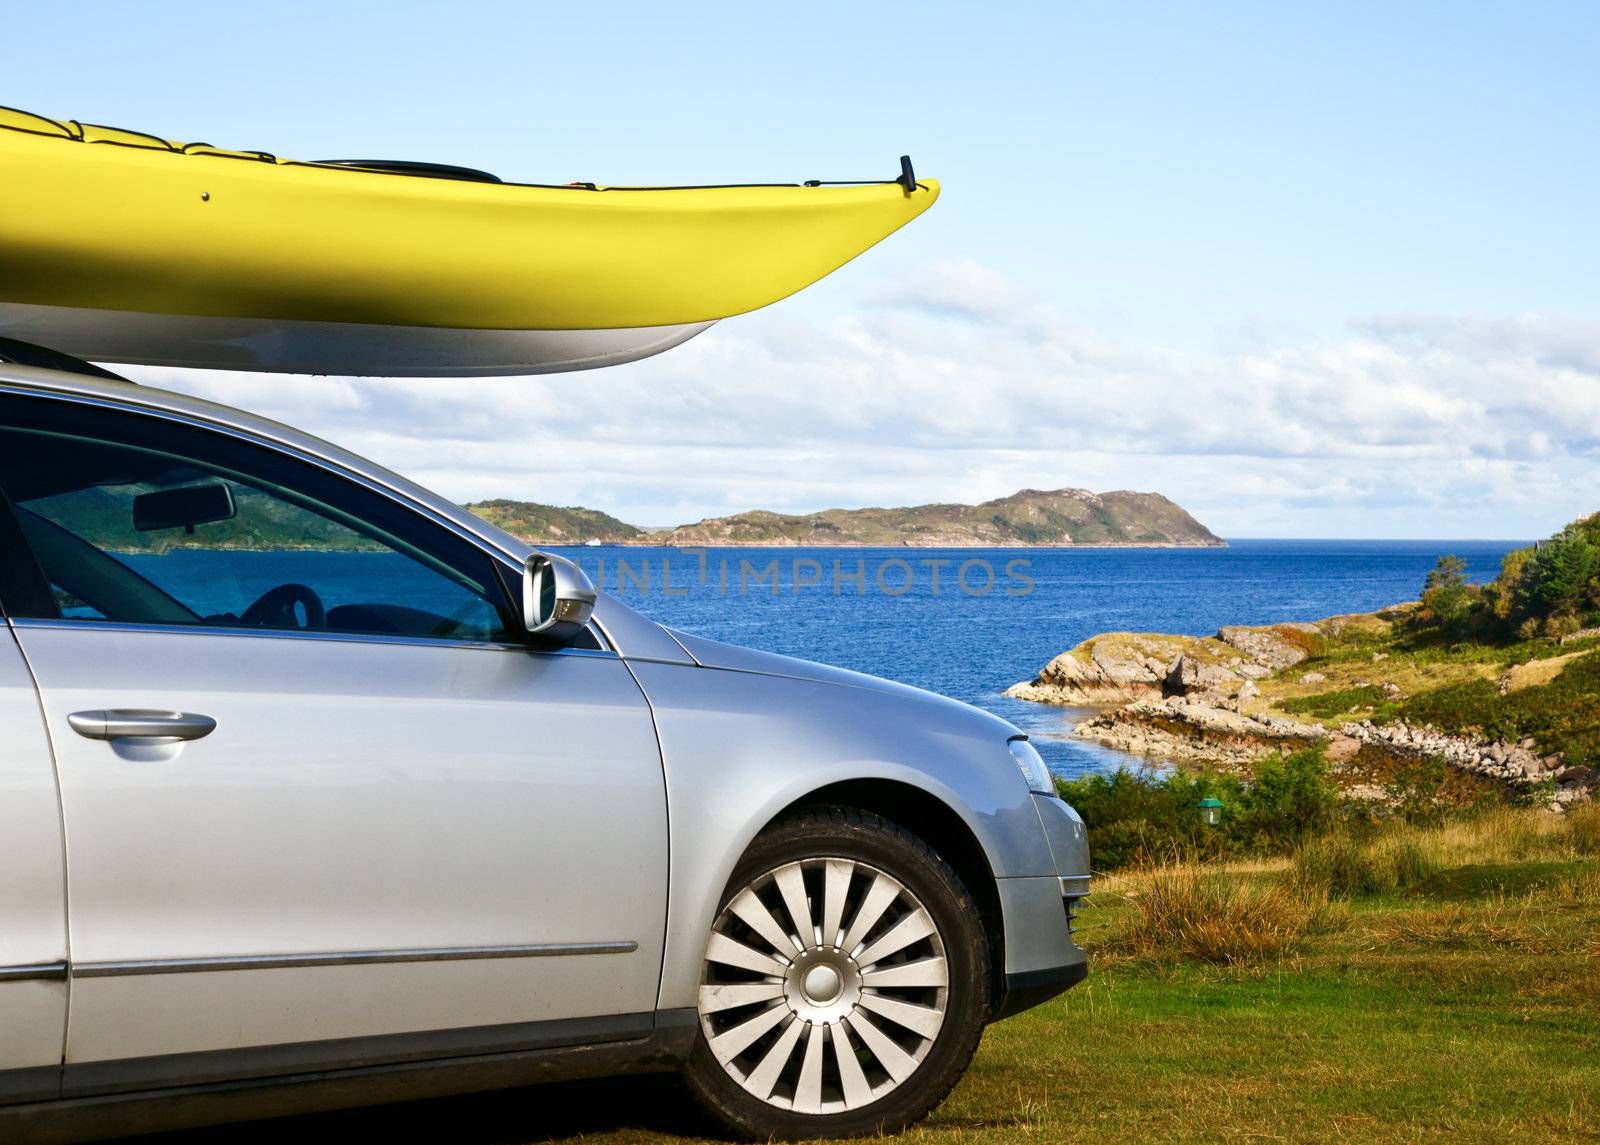 Car with yellow kayak at ocean shore